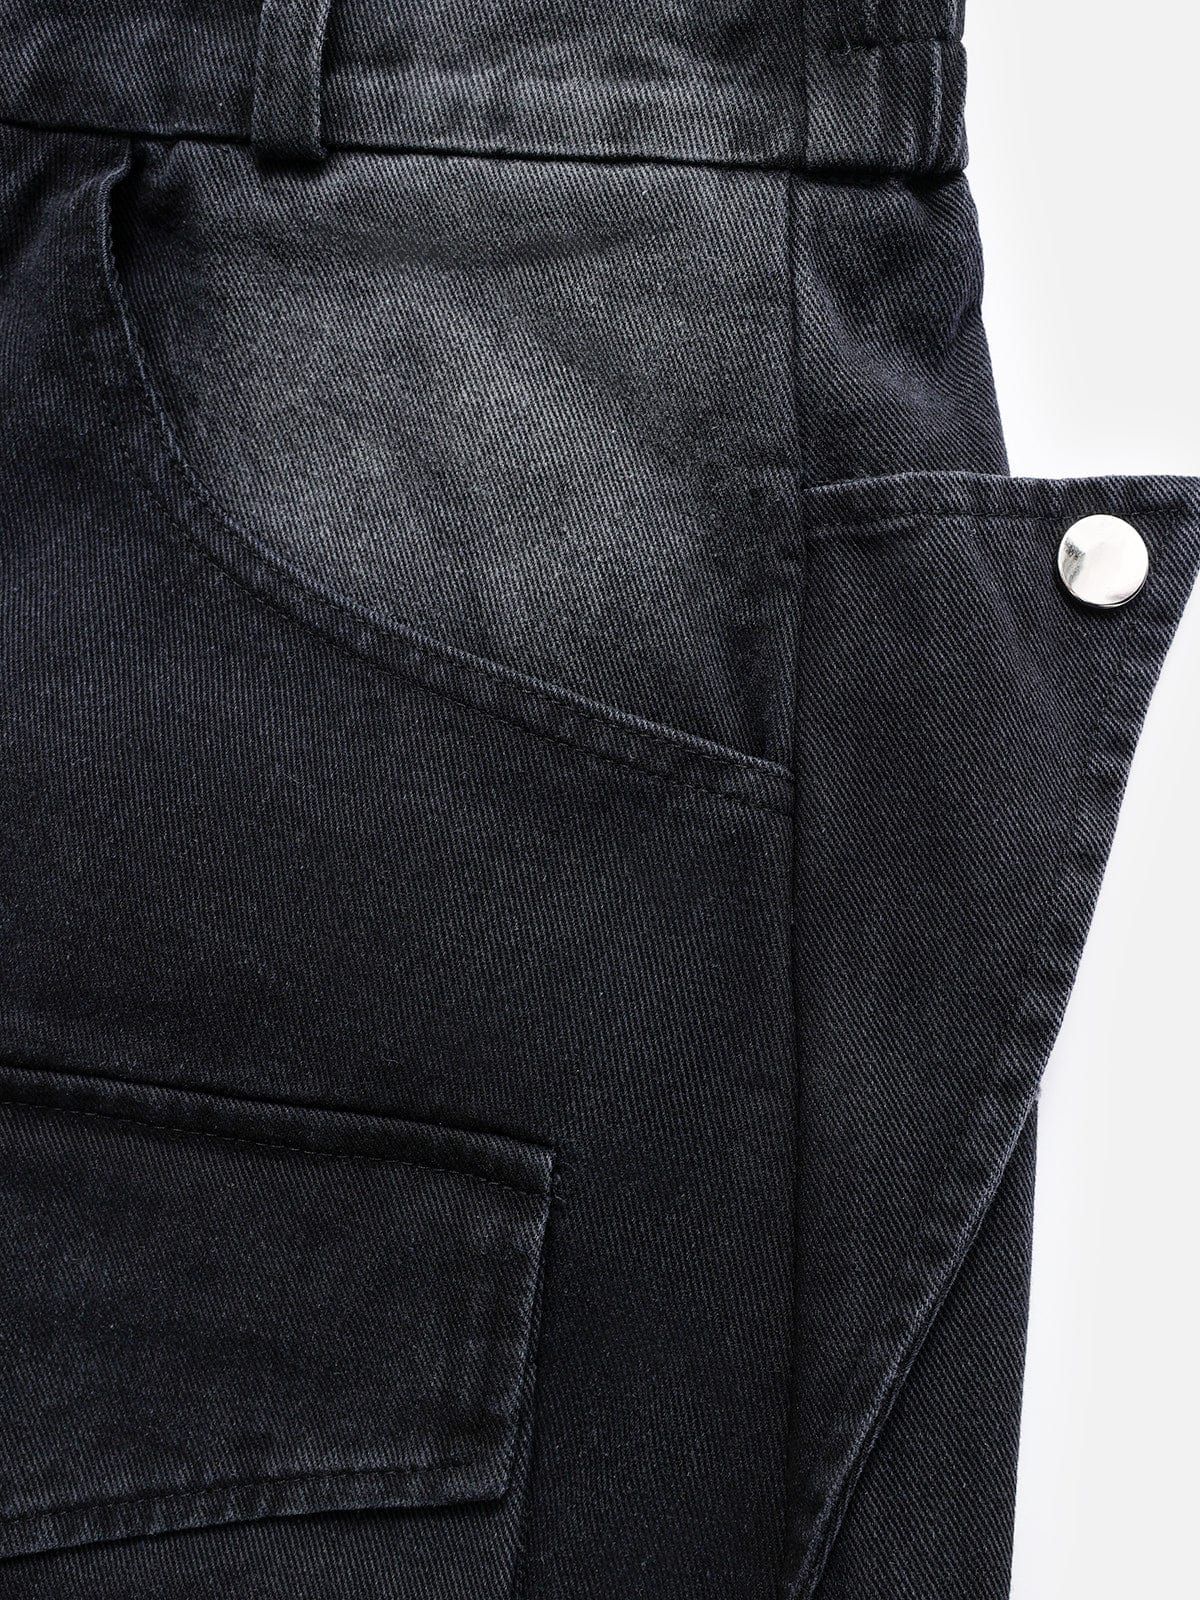 NEV Multi-Pocket Drawstring Jeans